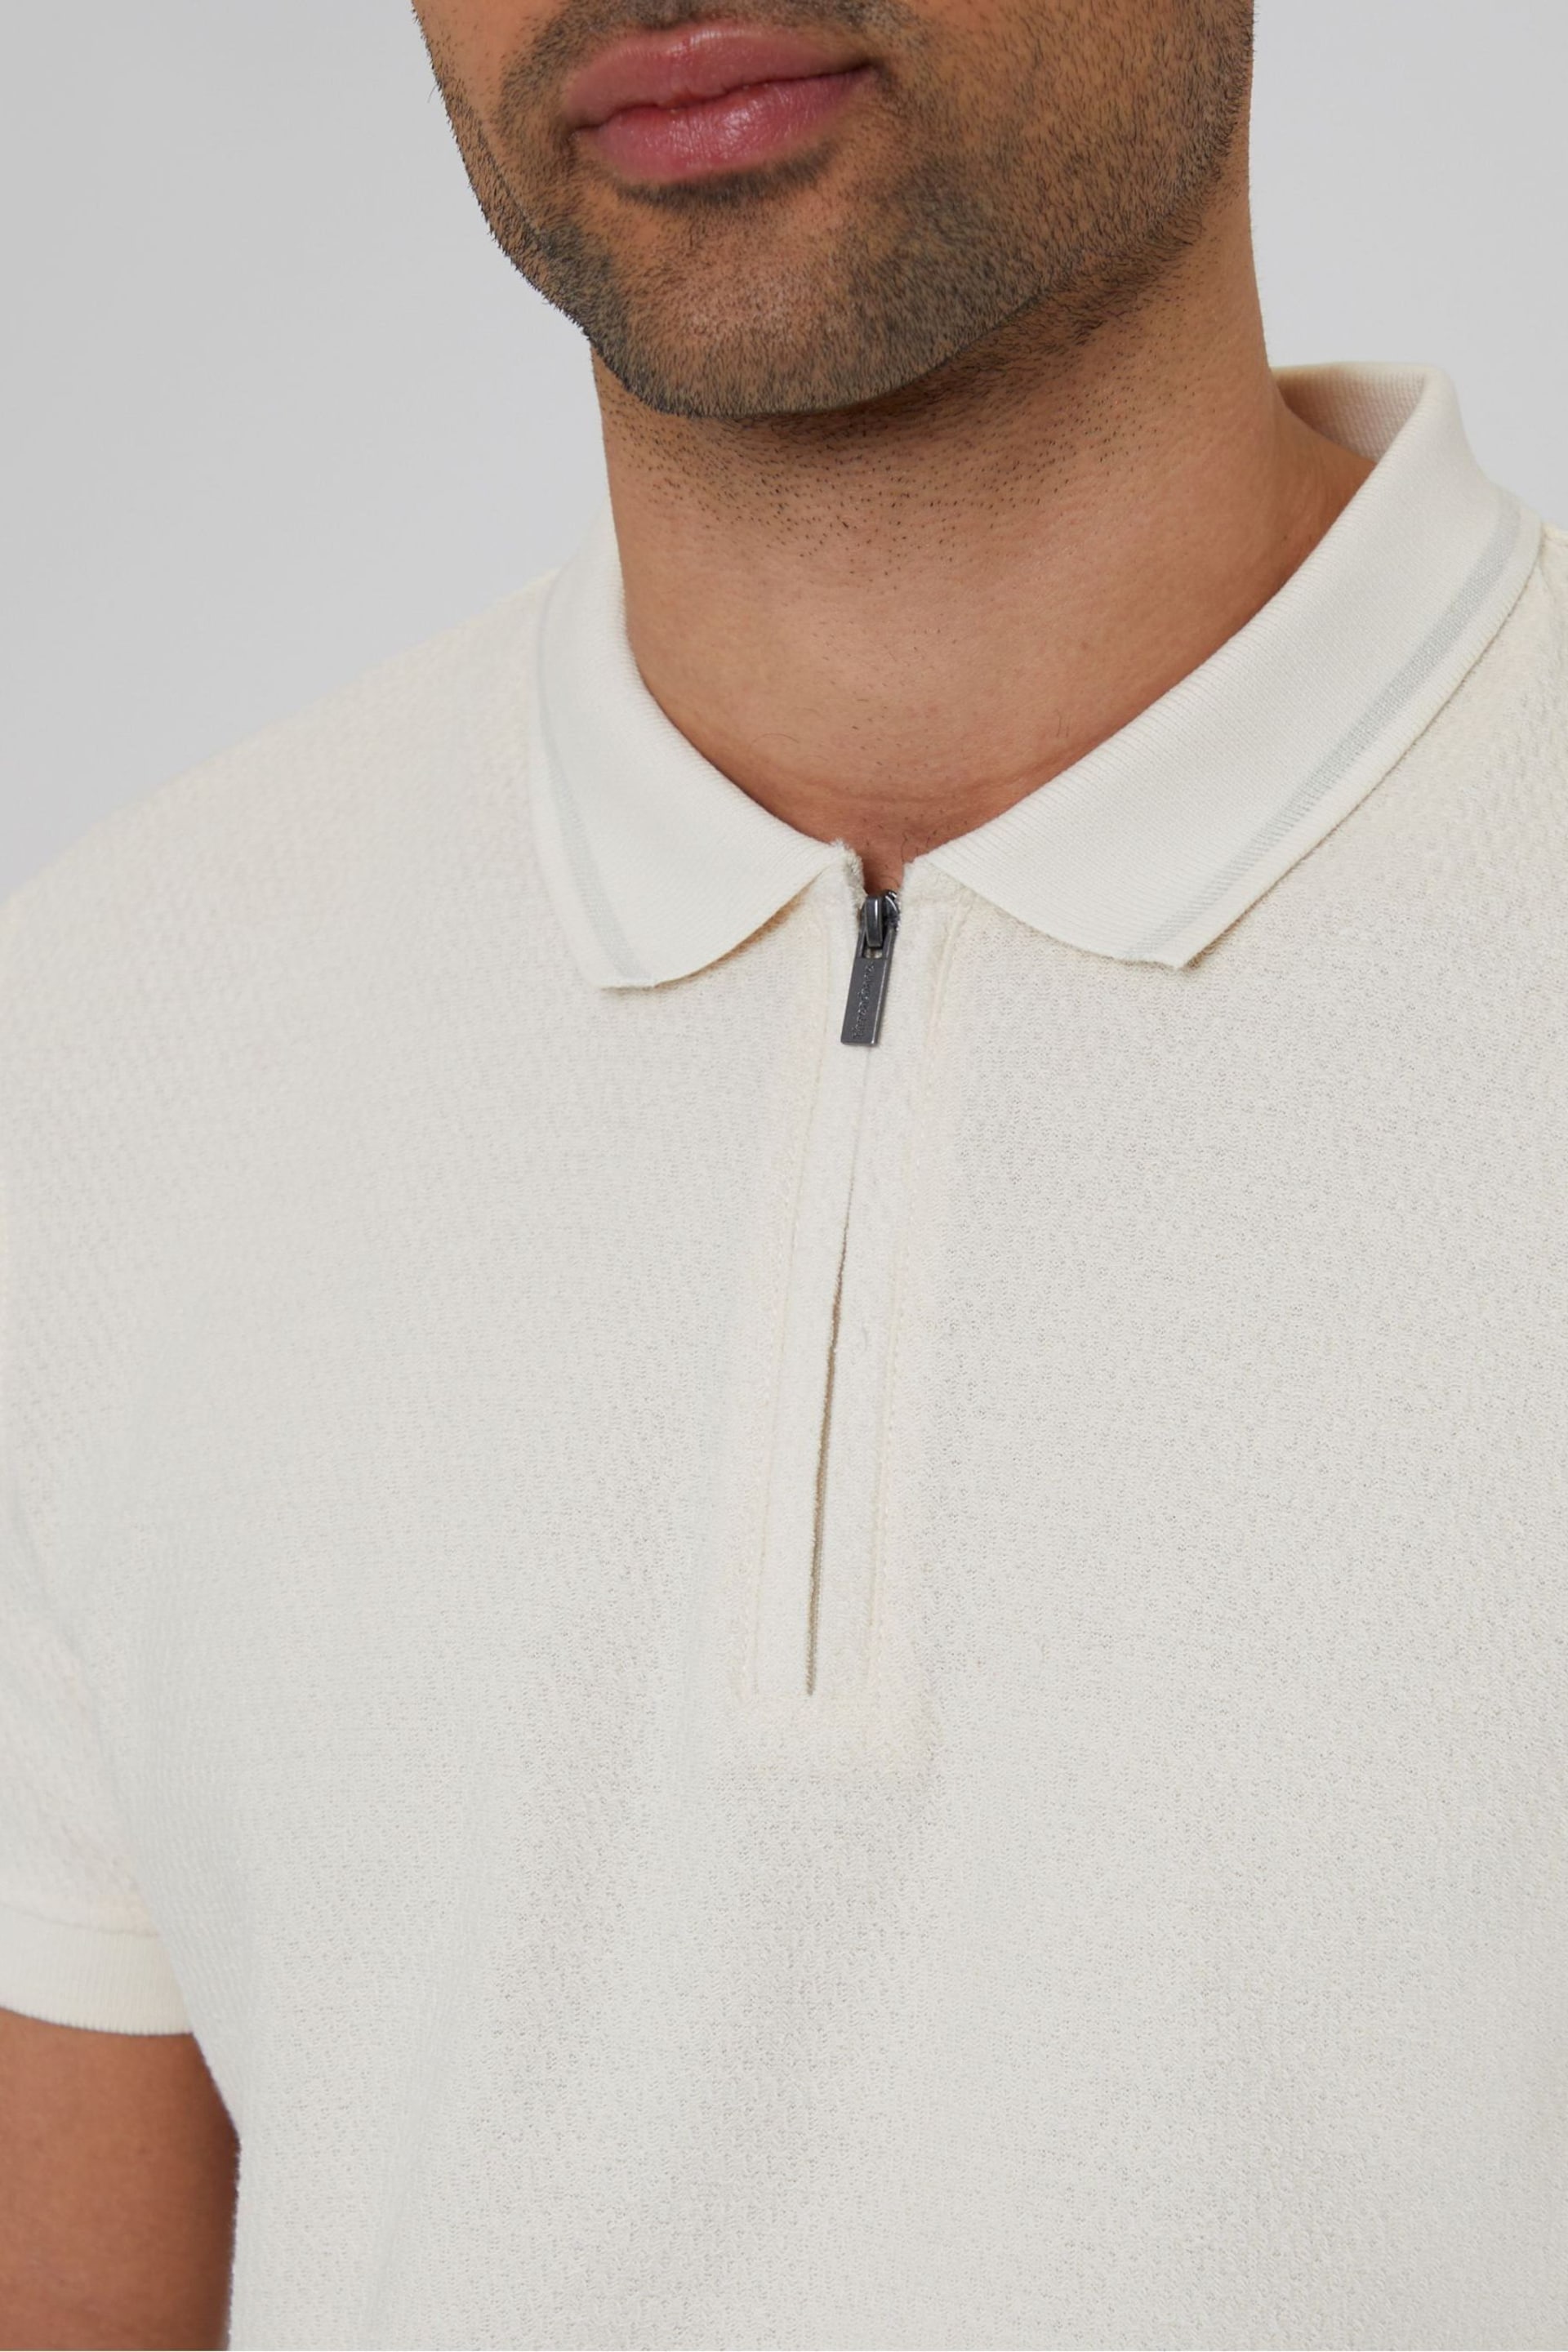 Threadbare Ecru Geometric Print Zip Collar Cotton Jersey Polo Shirt - Image 8 of 8